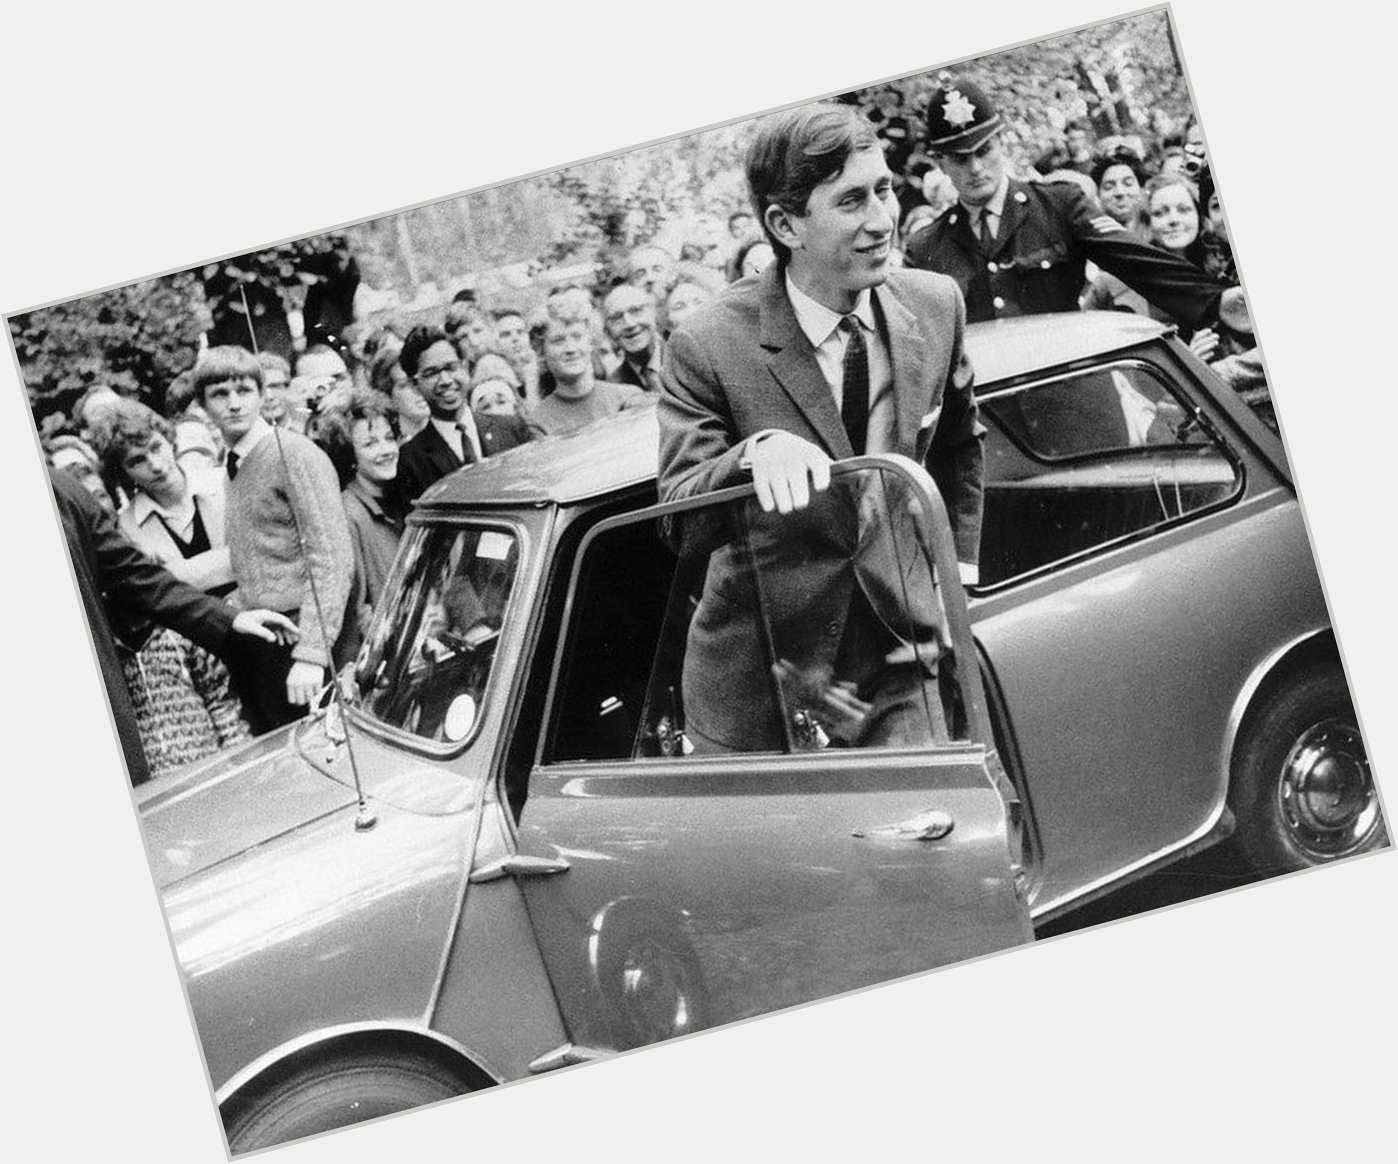 Happy Birthday Prince Charles.Always had good taste in cars.  